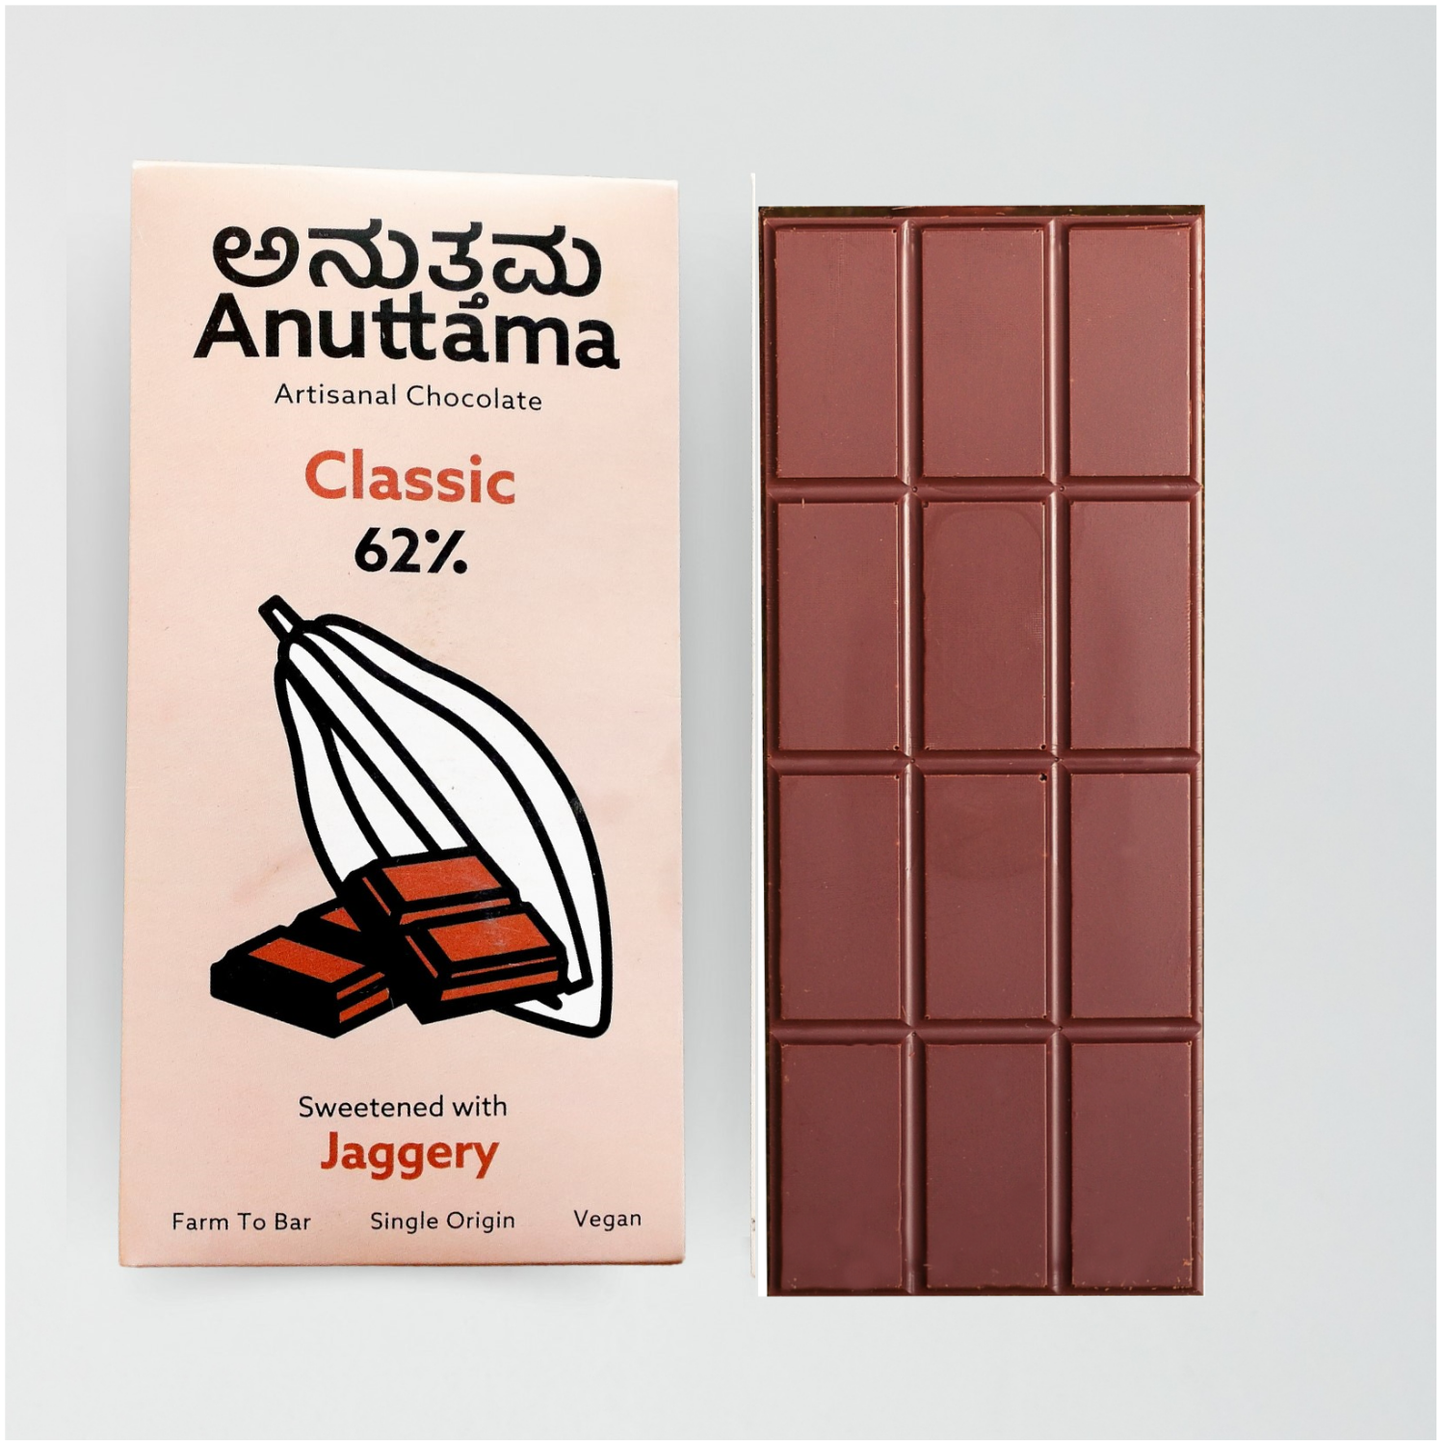 ANUTTAMA Dark Chocolate | Combo of 50% Bella Tharai Cocoa & 62% Cocoa Classic | Natural Jaggery | 50gm, Pack of 2